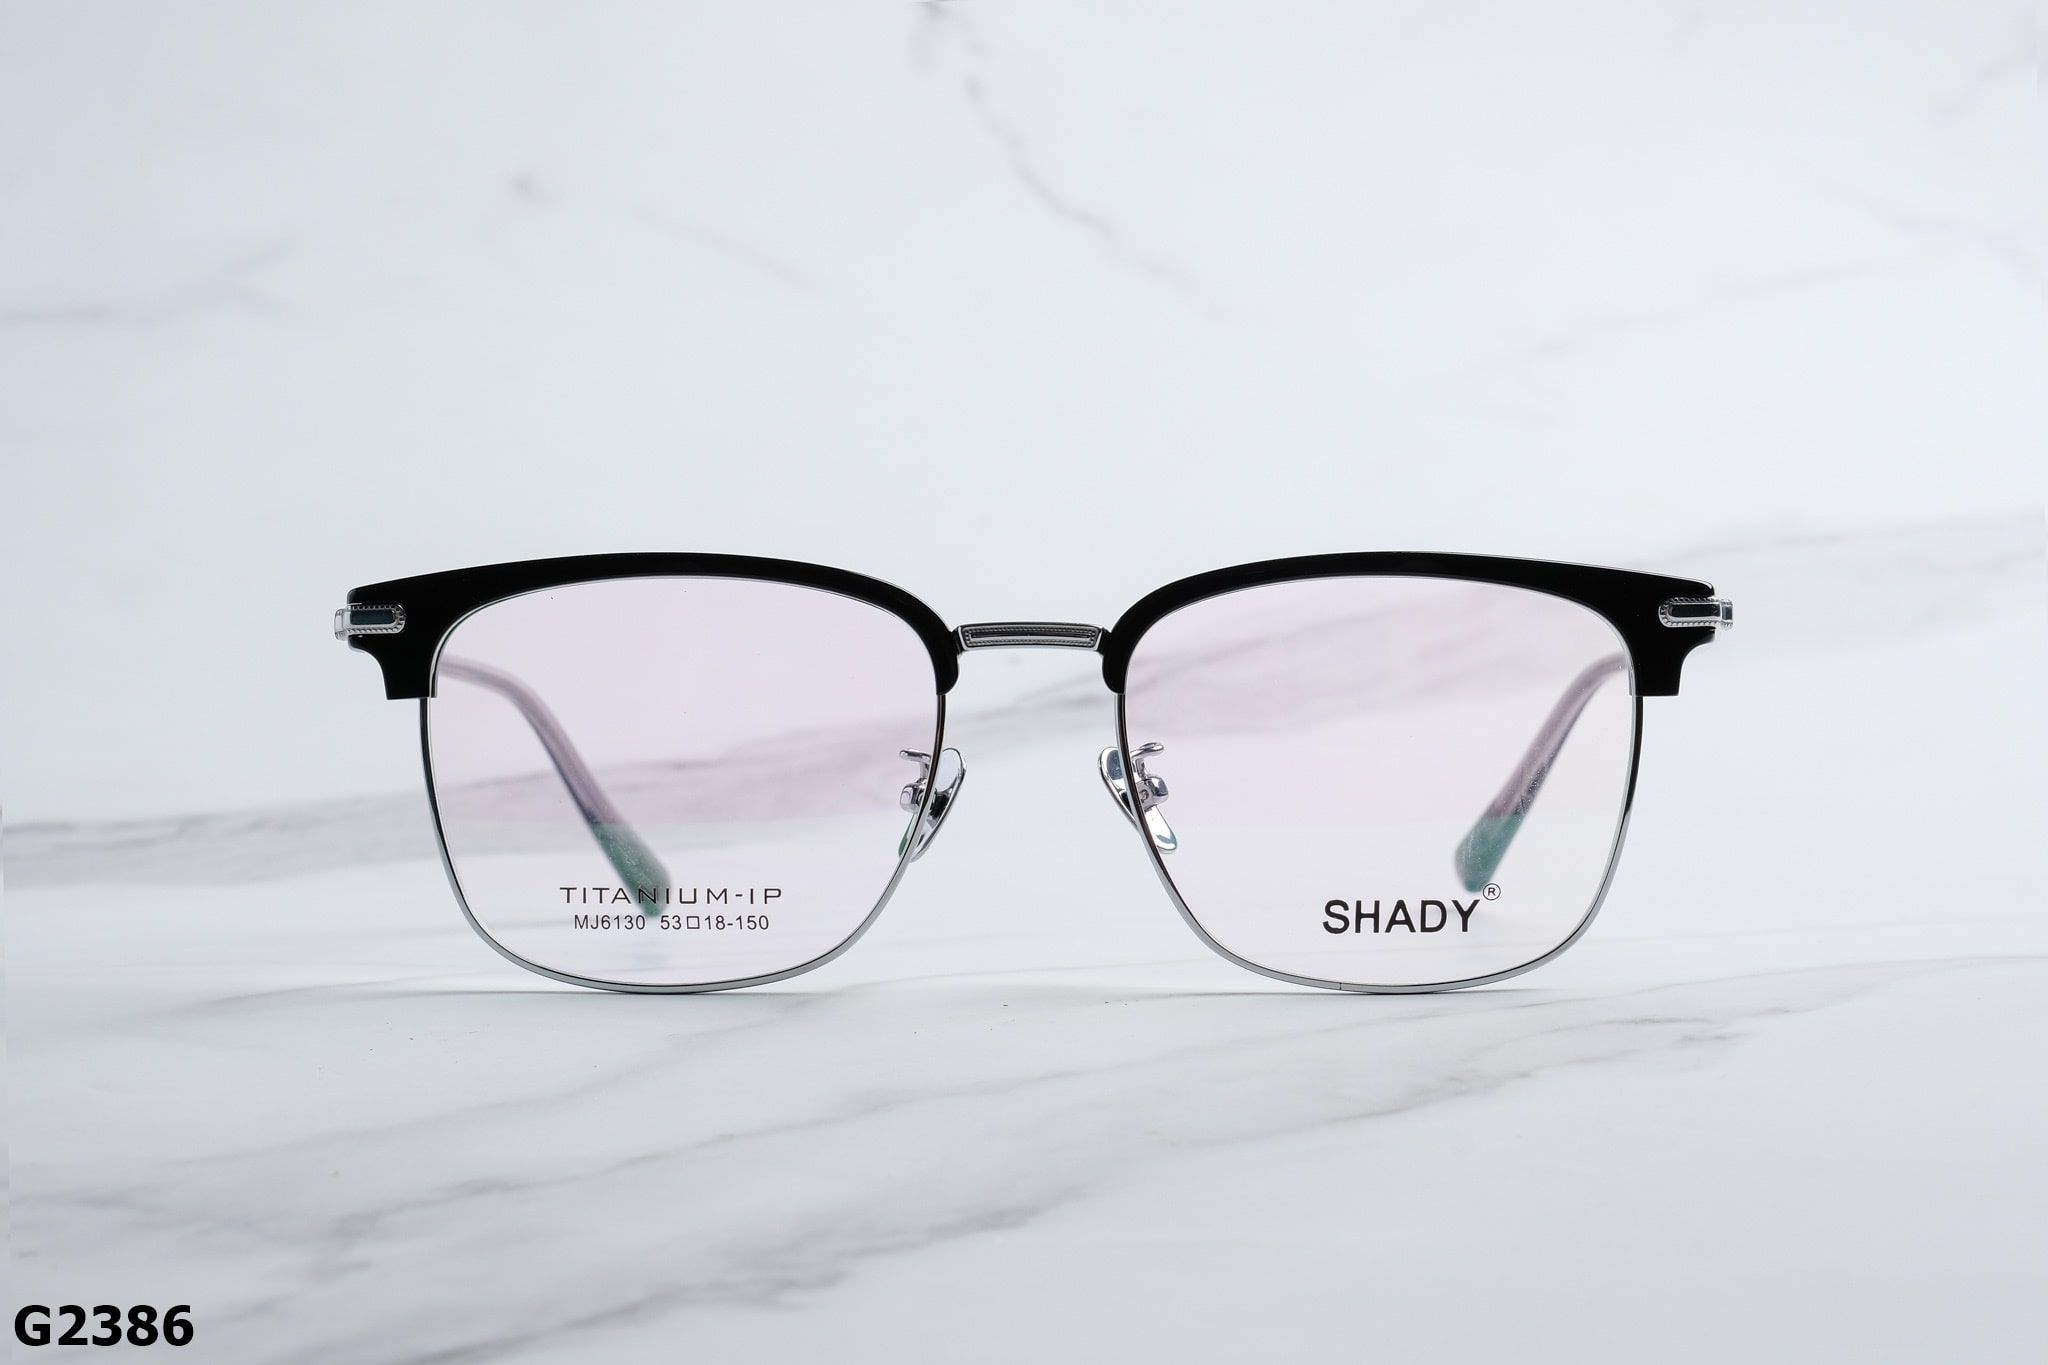  SHADY Eyewear - Glasses - G2386 